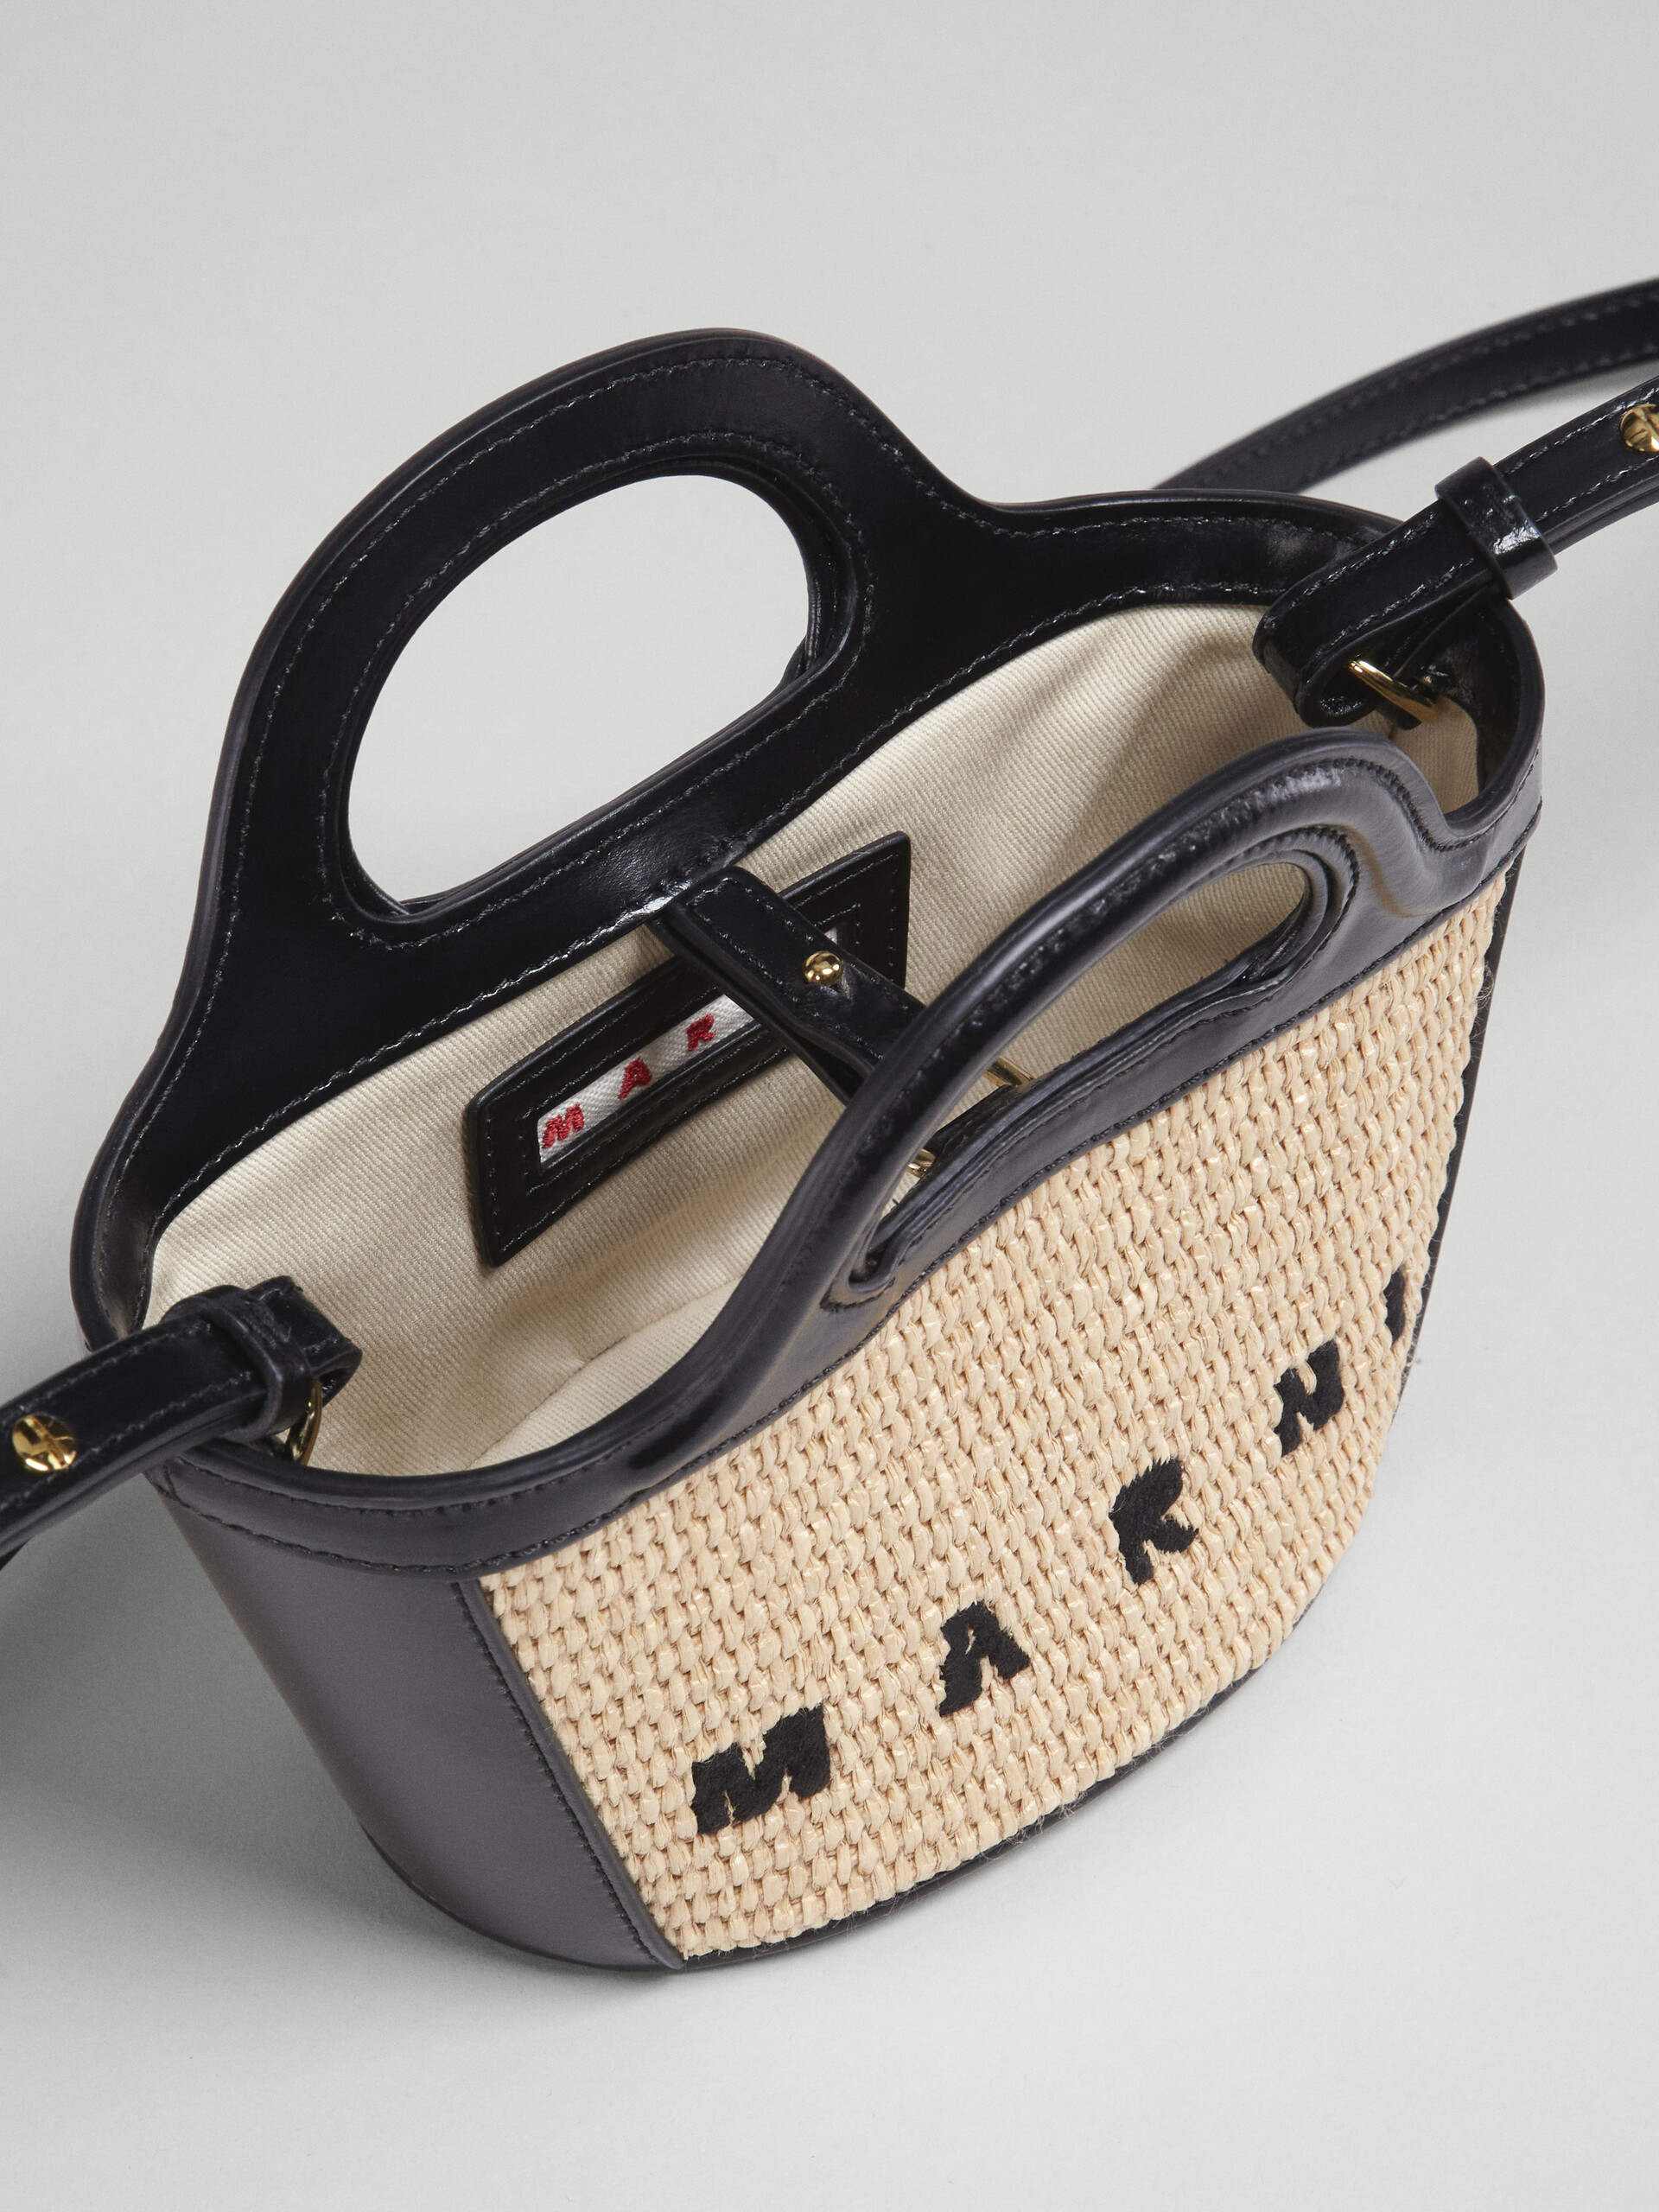 Black leather and raffia micro TROPICALIA SUMMER bag - Handbag - Image 5